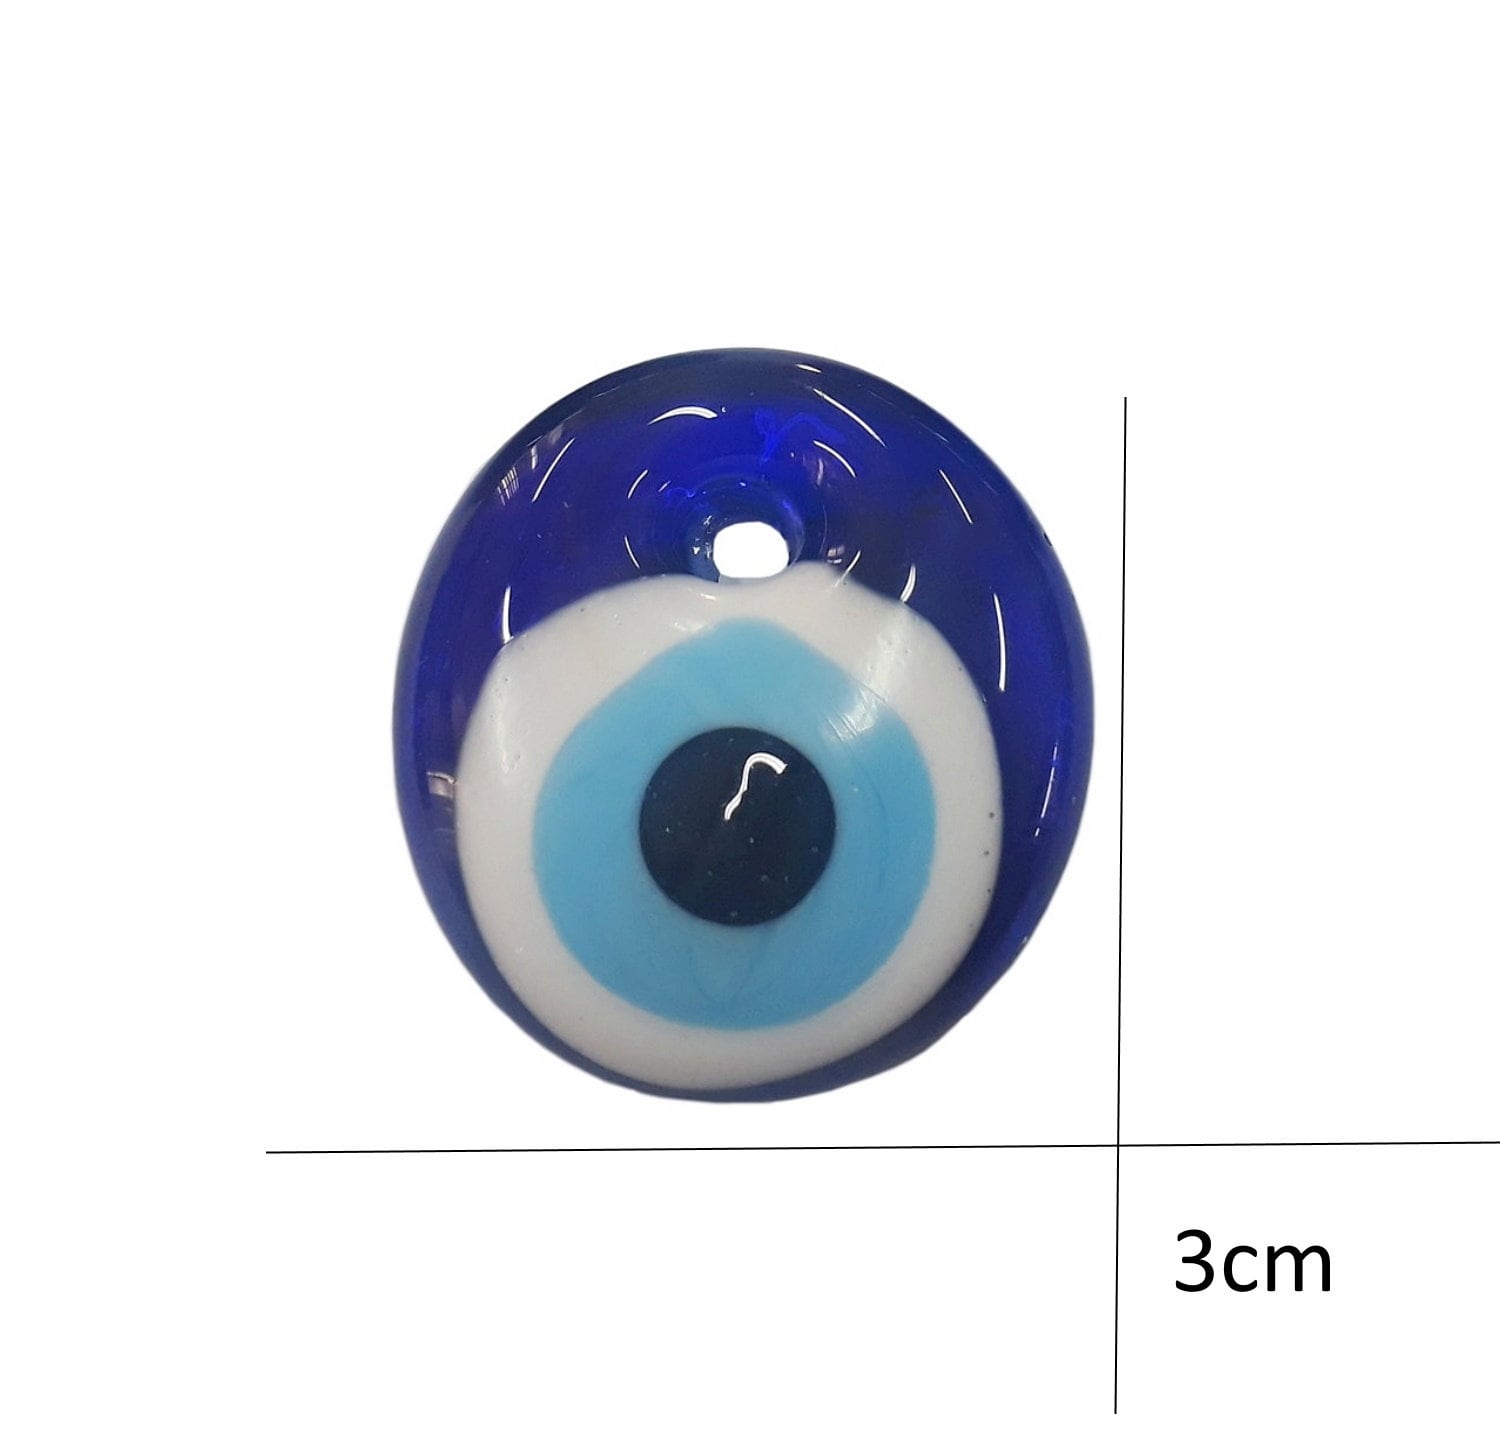 5x Nazar Boncuk 3cm Glas Anhänger Türkei Perlen Evil Eye Blau Augen Böser  Blick Handarbeit Charm Schmuck Deko Geschenk Verbrämung - .de